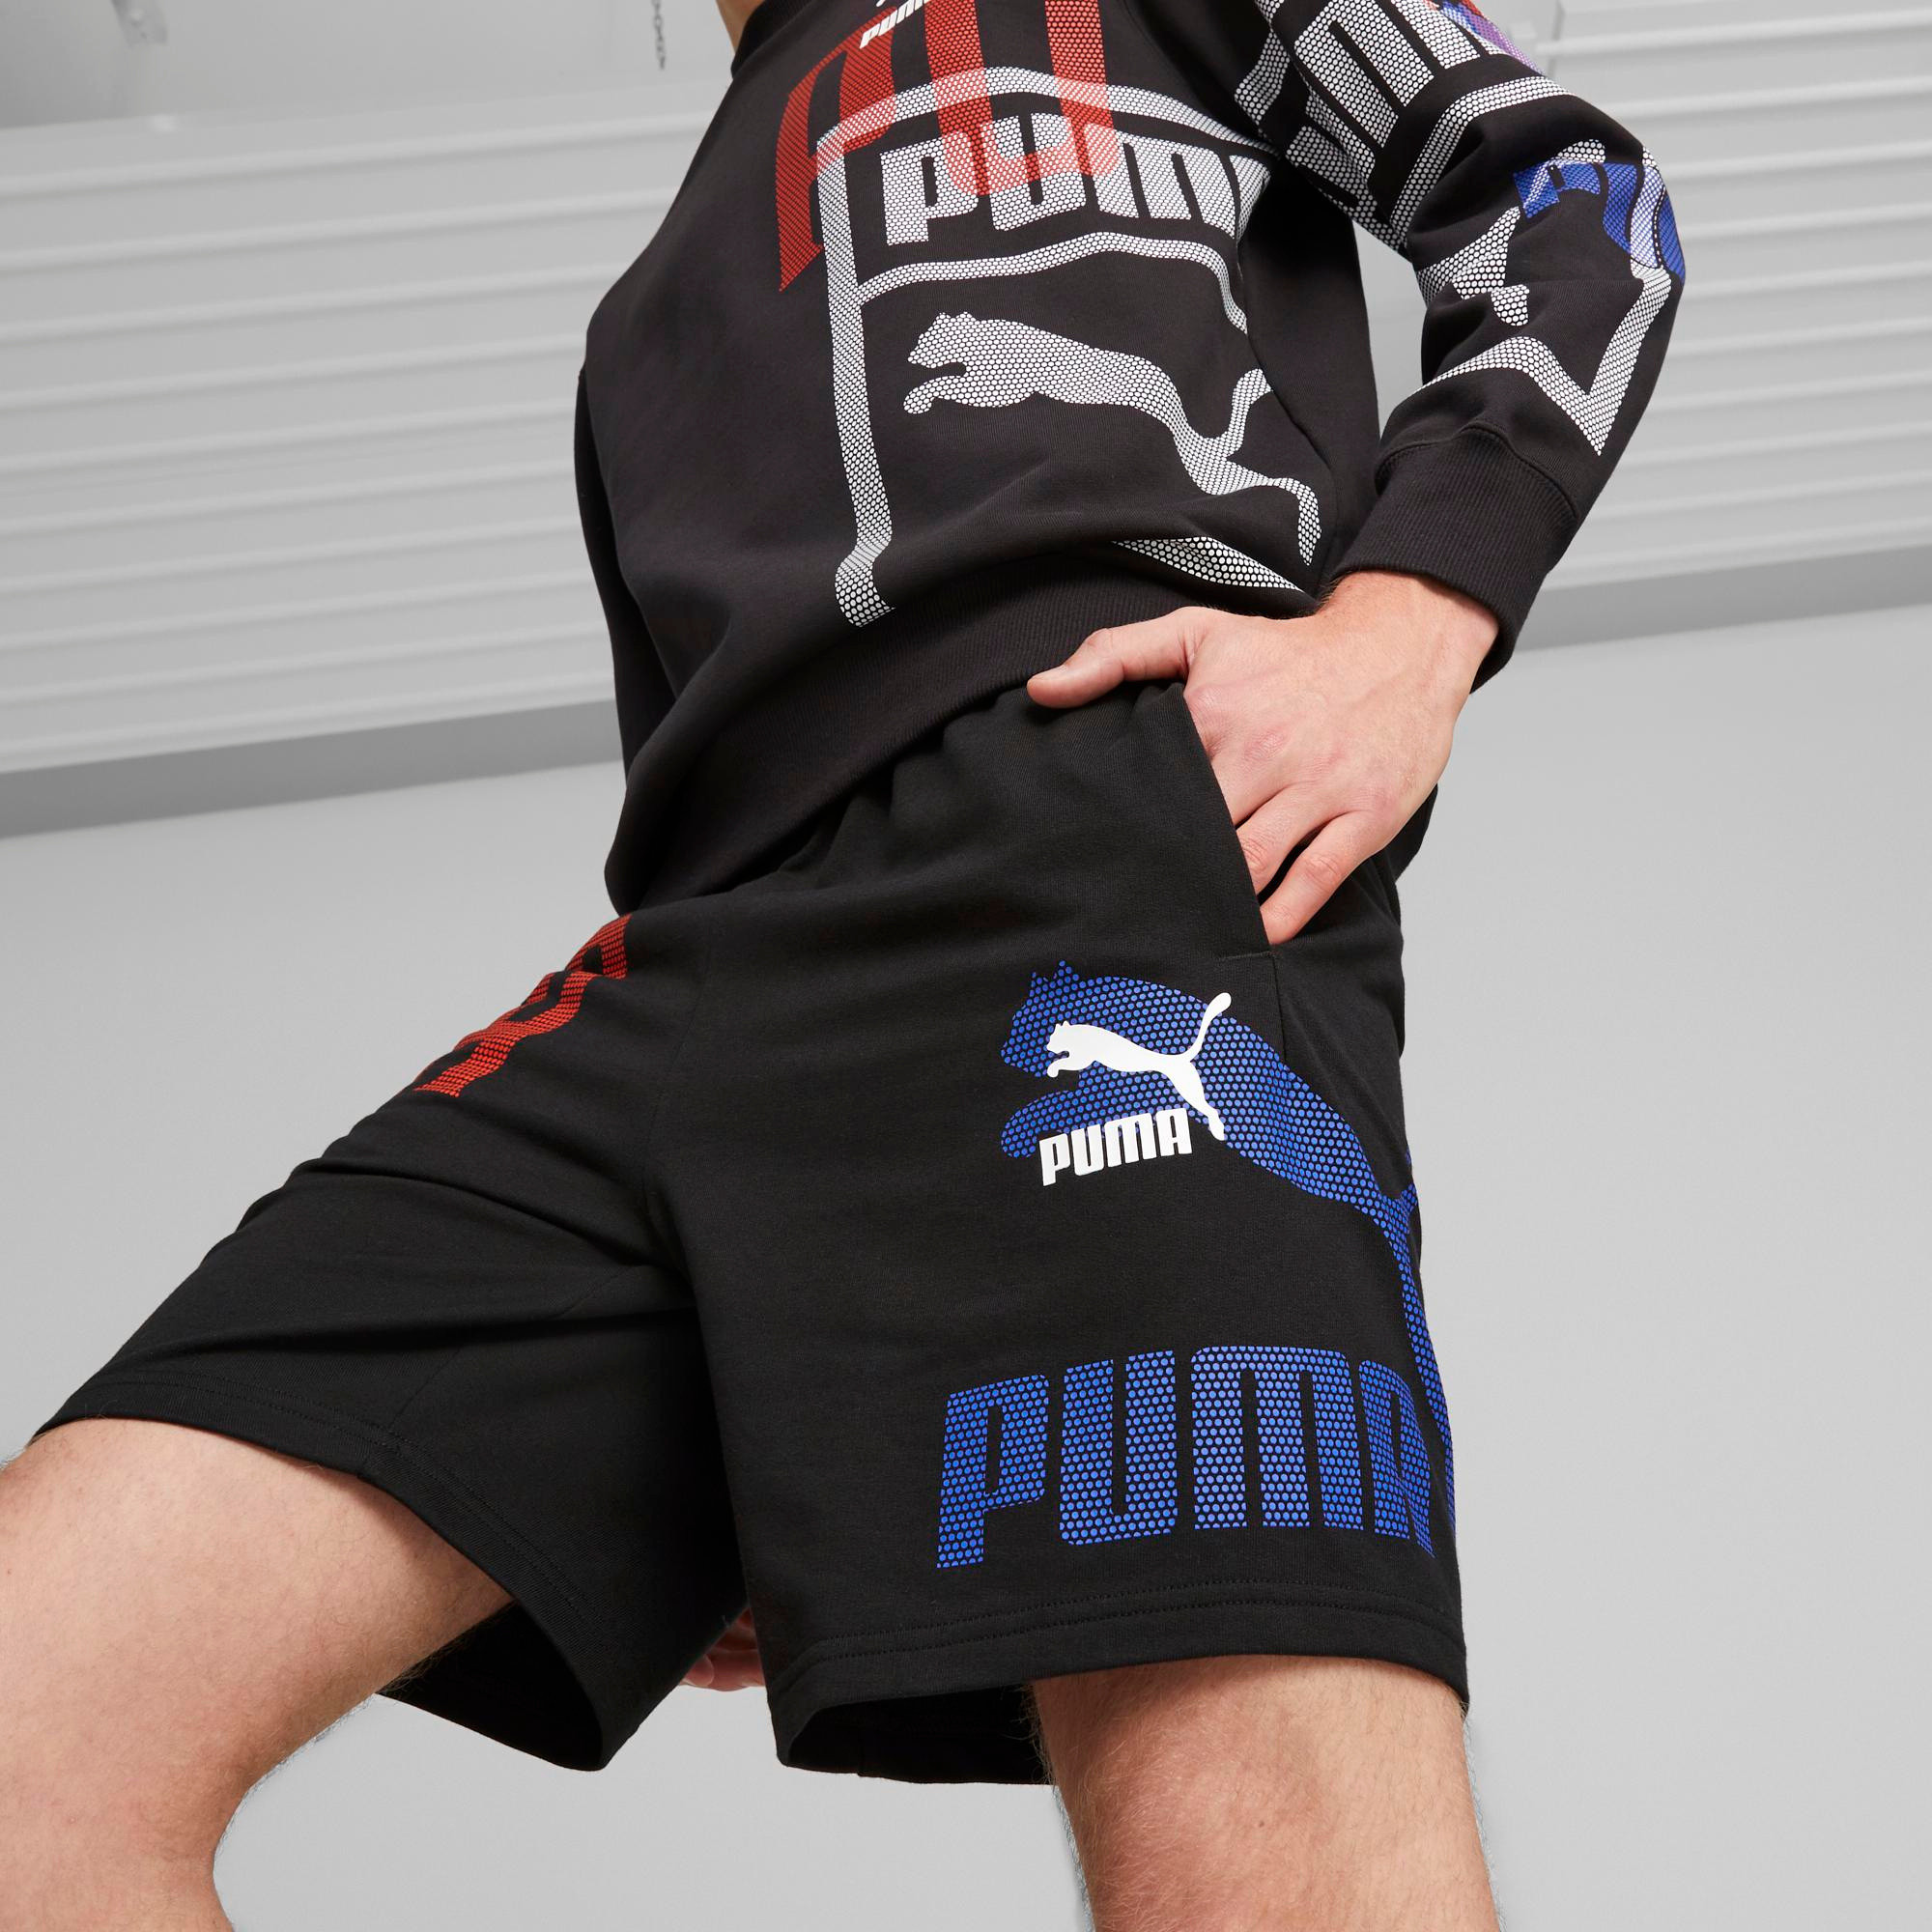 Puma - Pantaloncini con logo, Nero, large image number 2